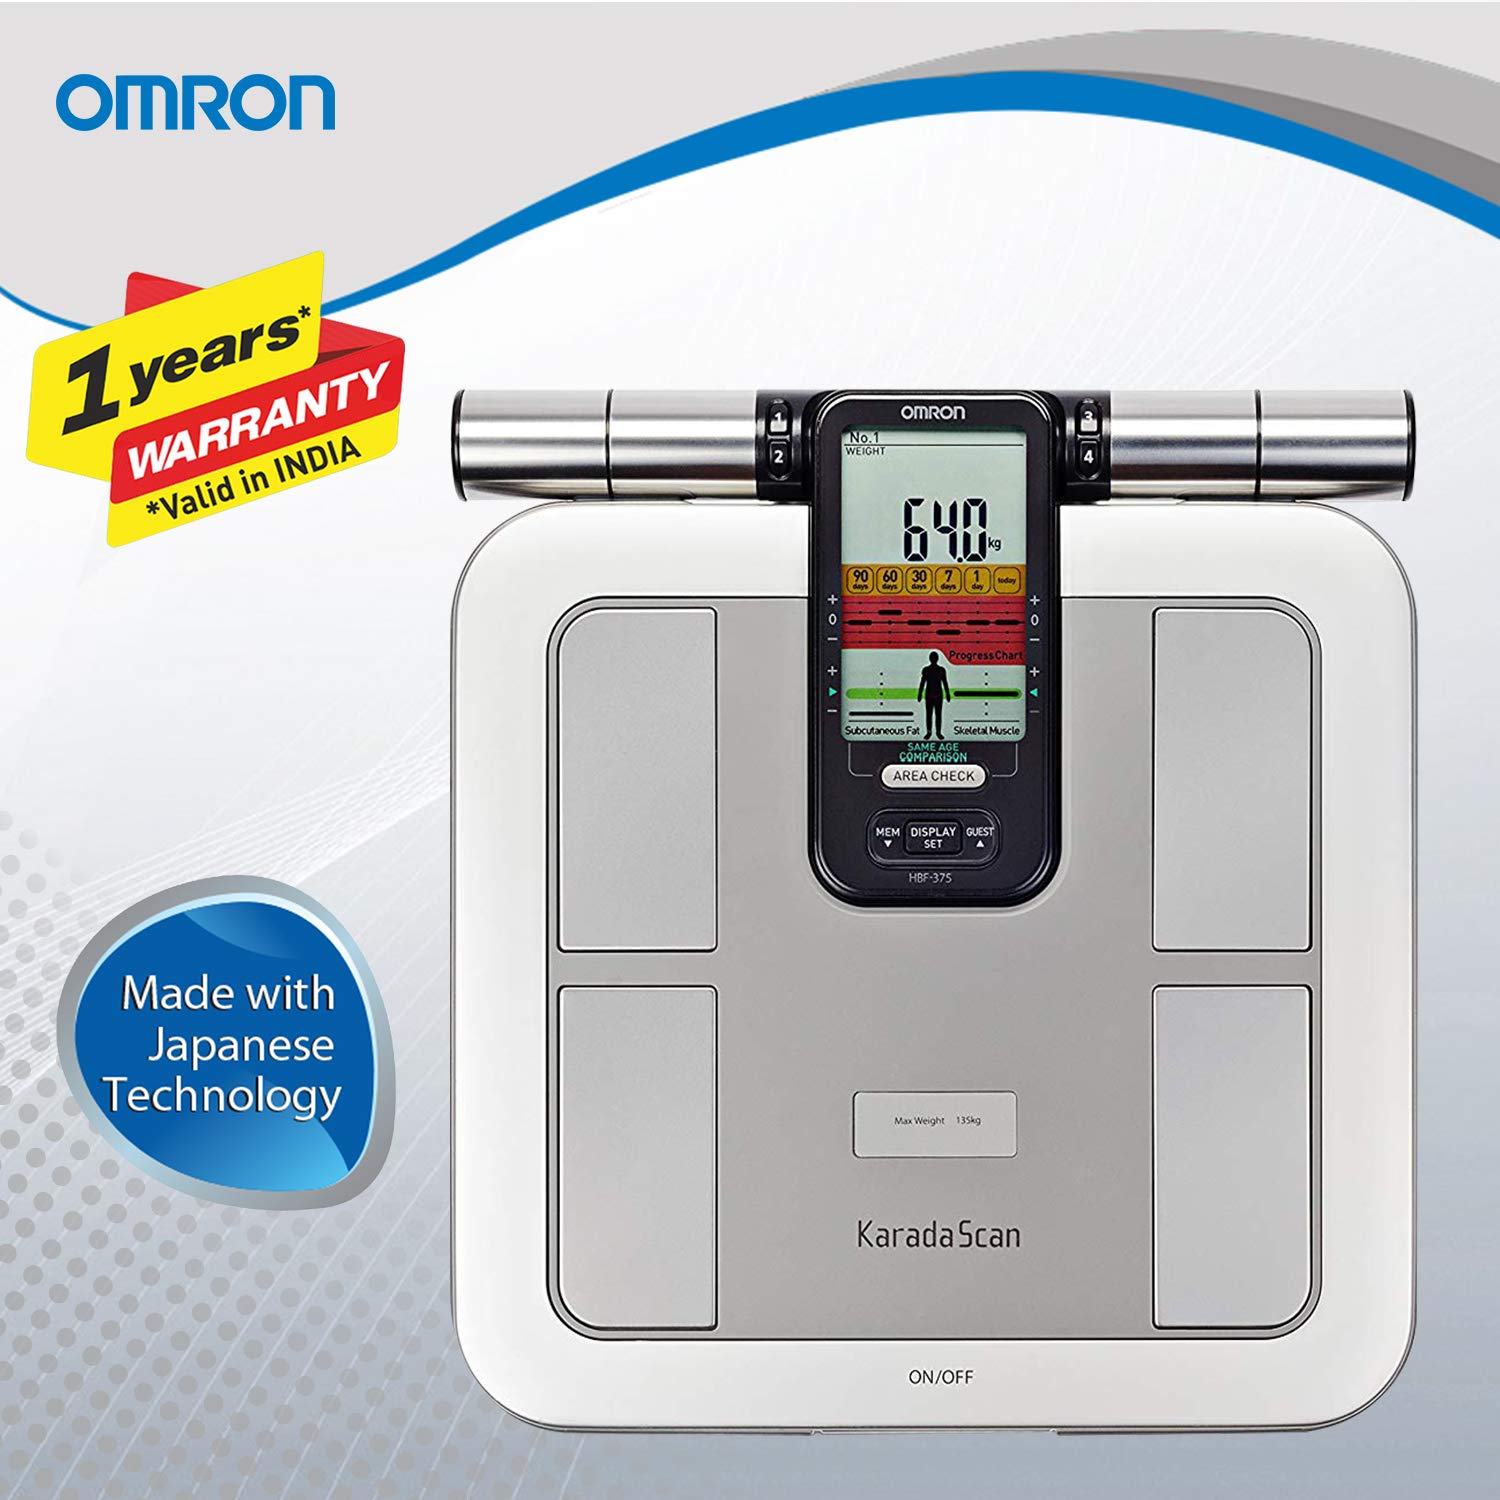 Omron HBF-375-IN Body Fat Monitor